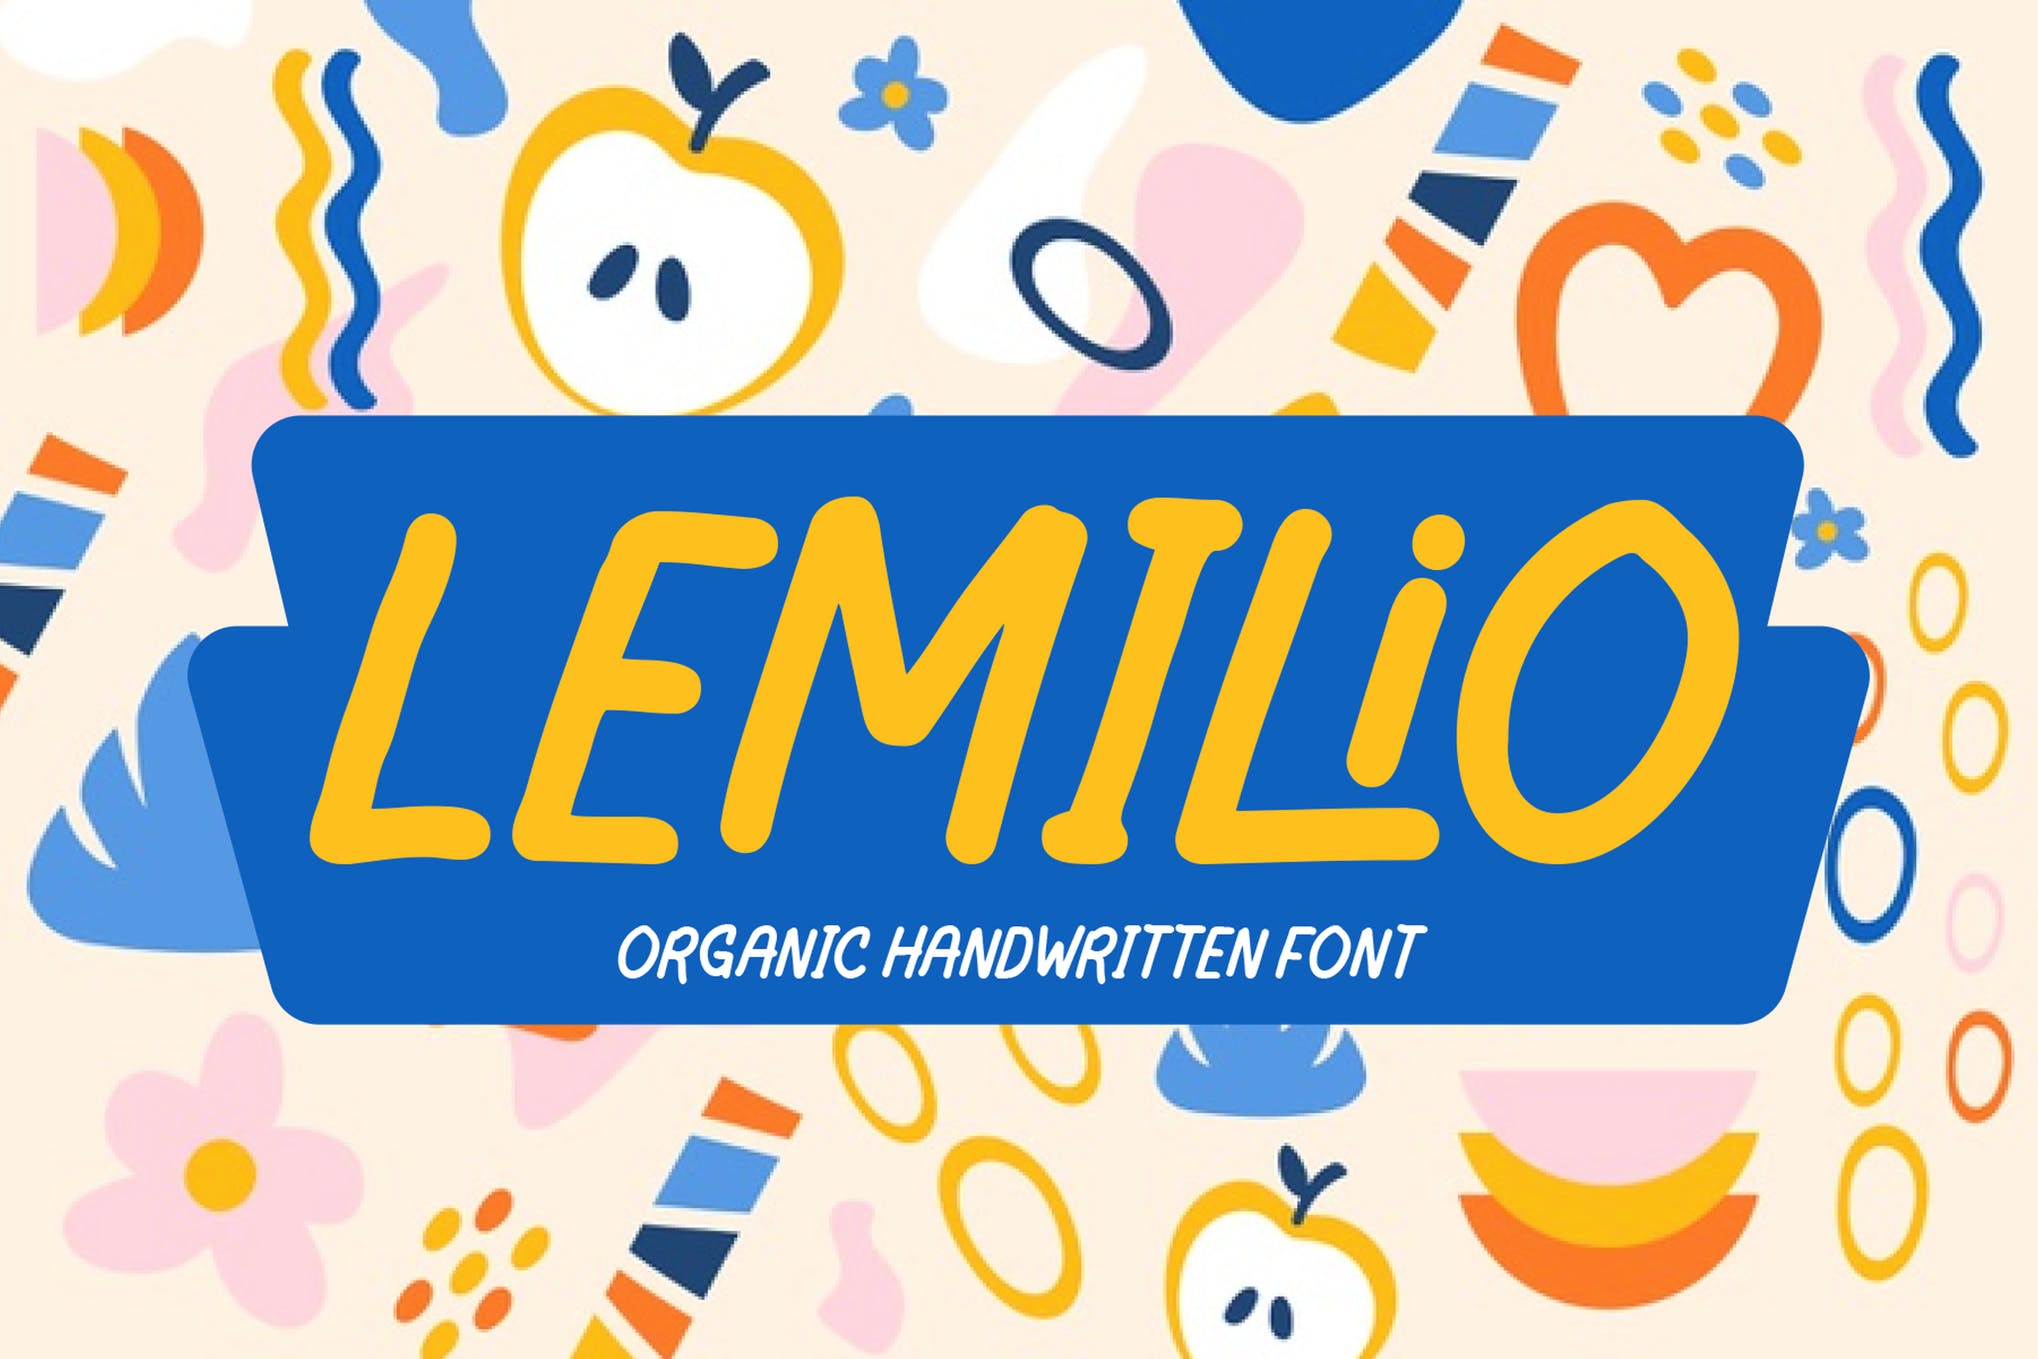 Lemilio - Organic Handwritten Font